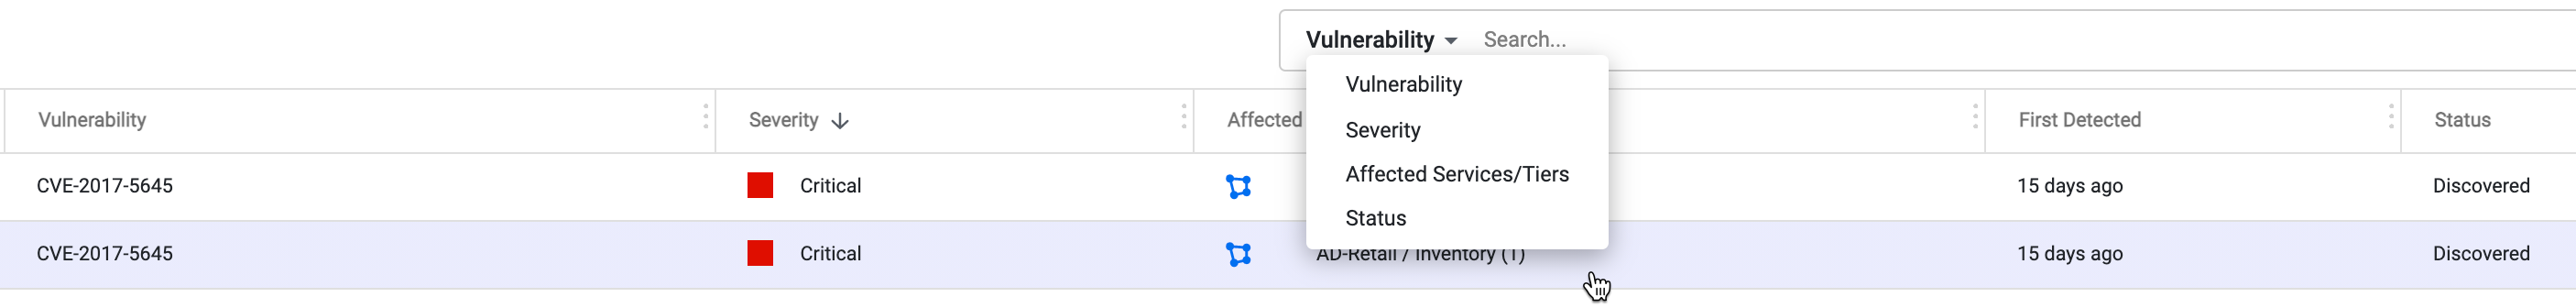 Vulnerability Search Filter